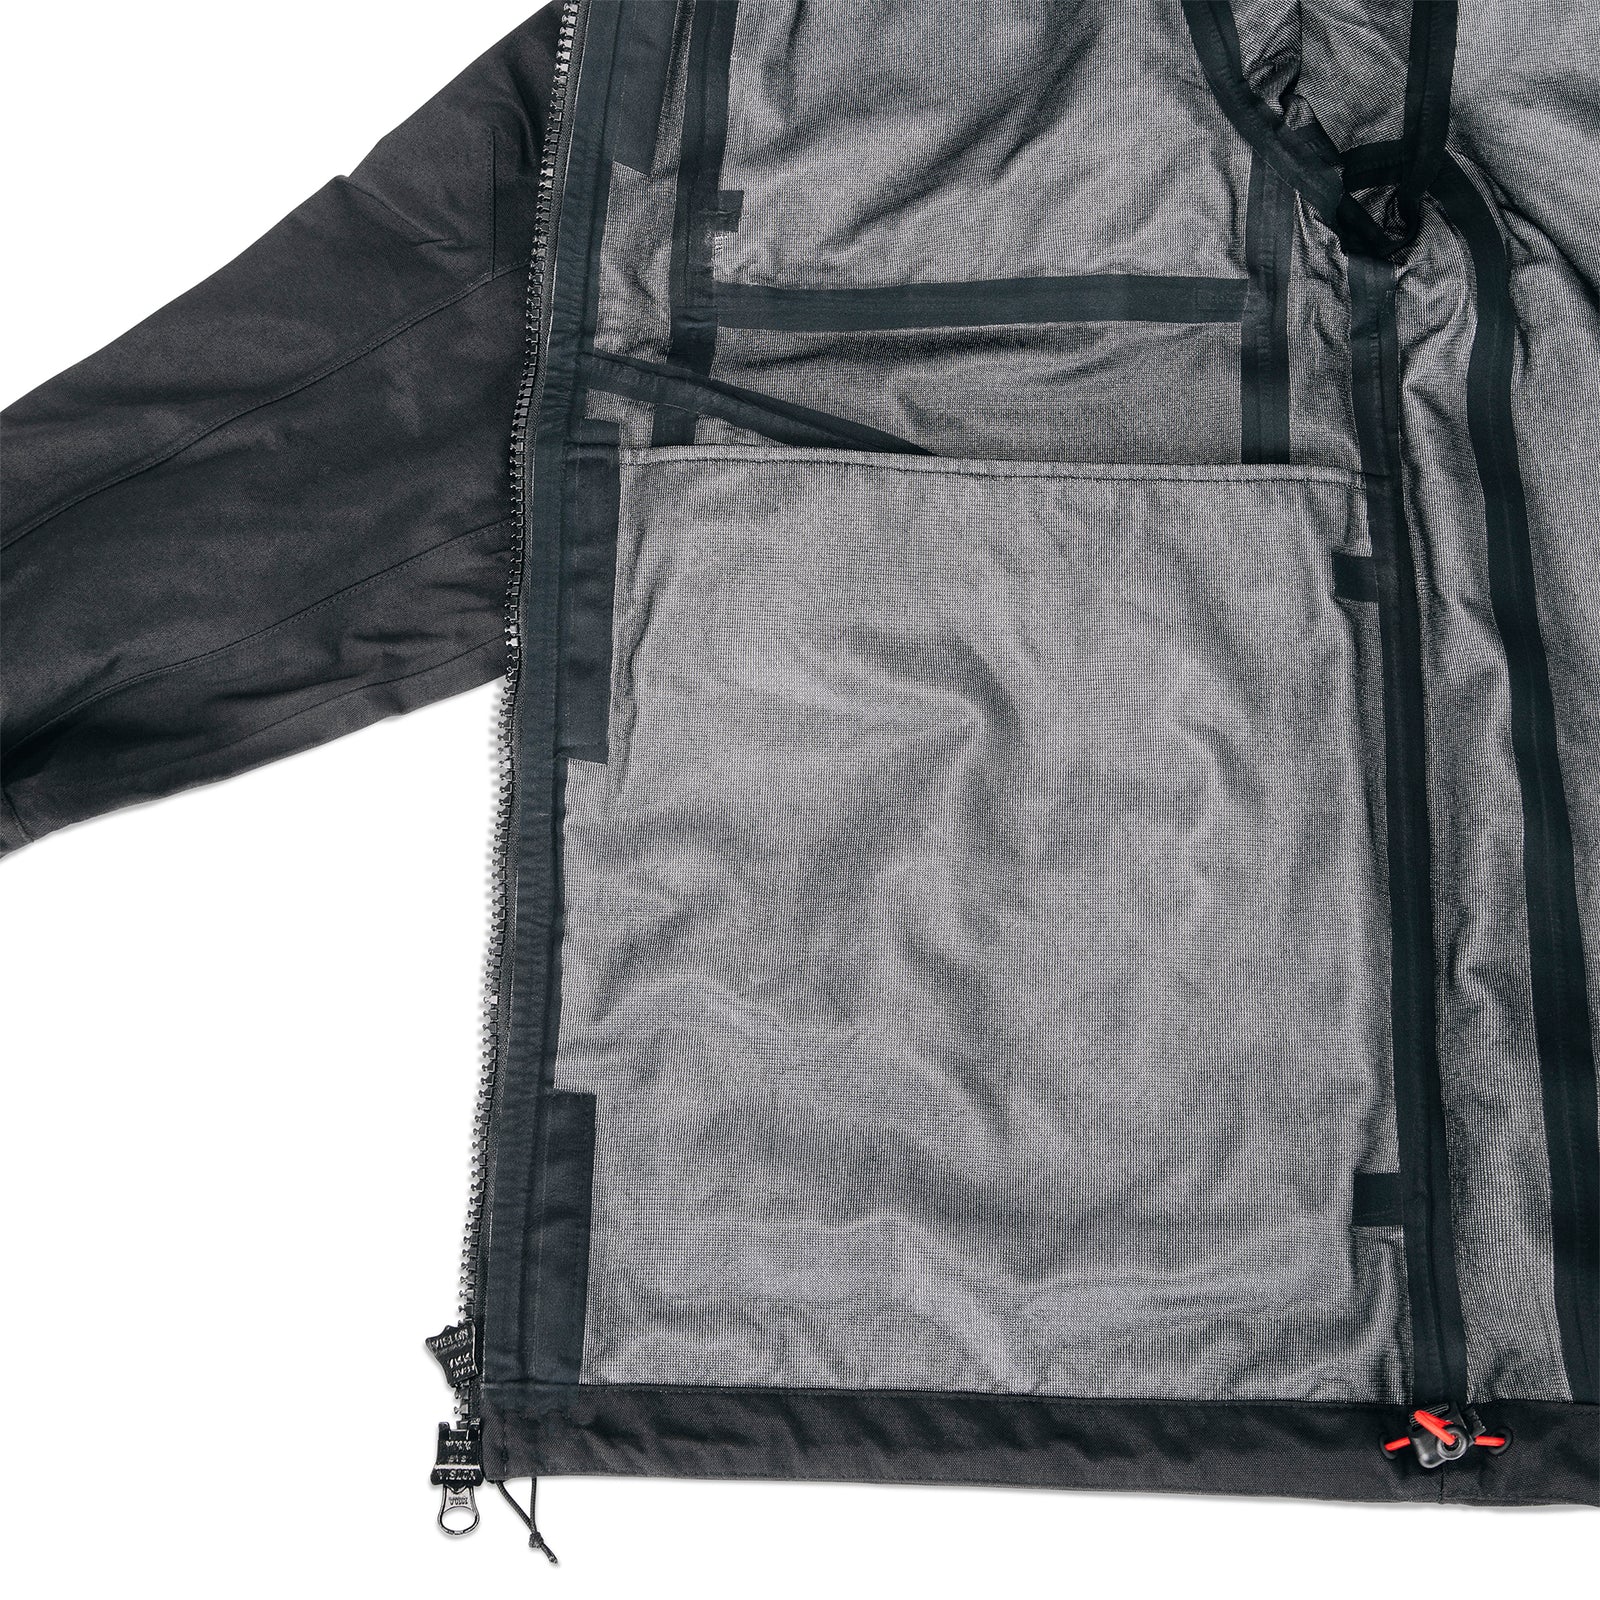 General shot of internal seam taping on Topo Designs Men's Mountain Parka waterproof shell jacket in black.